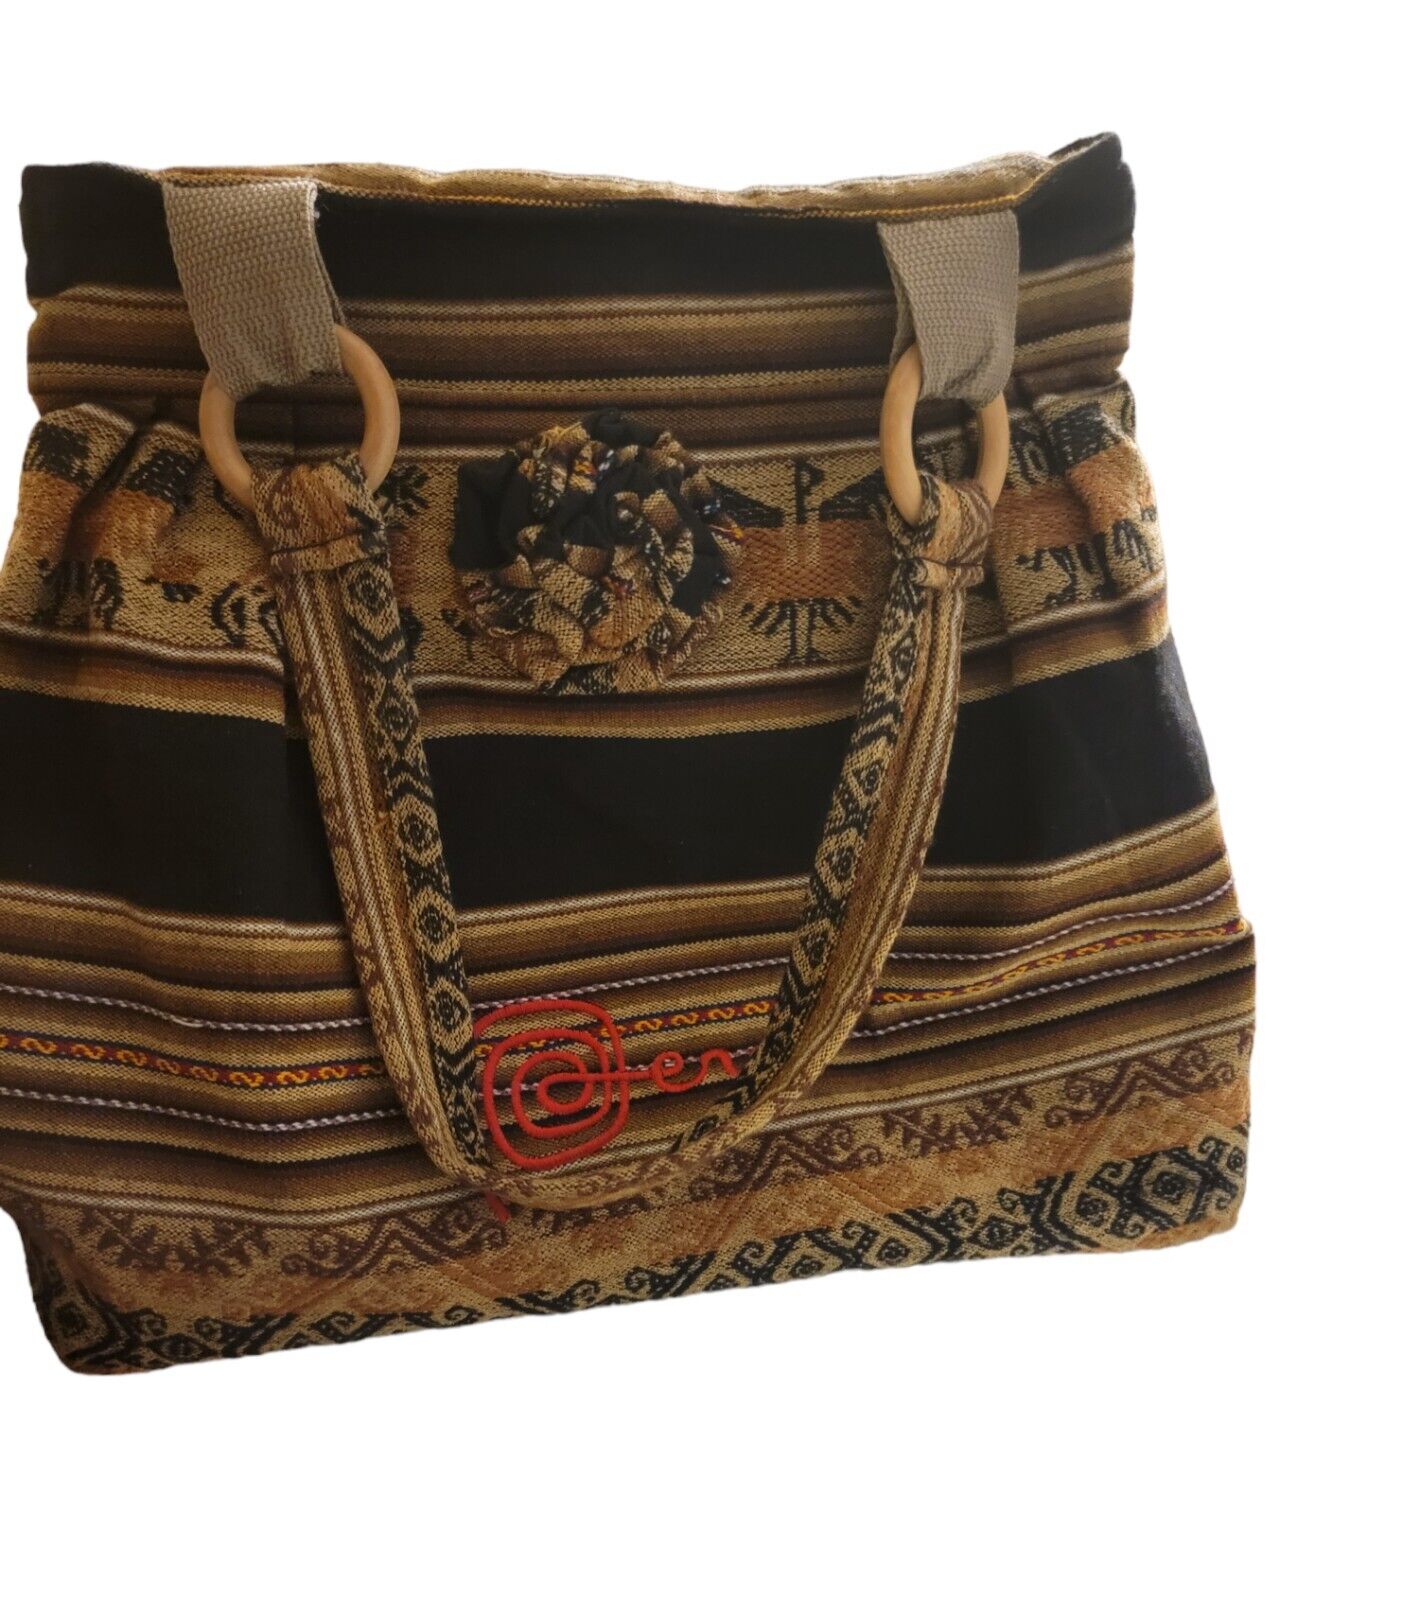 Black And Brown Peruvian Handmade Bag, Alpaca Wool